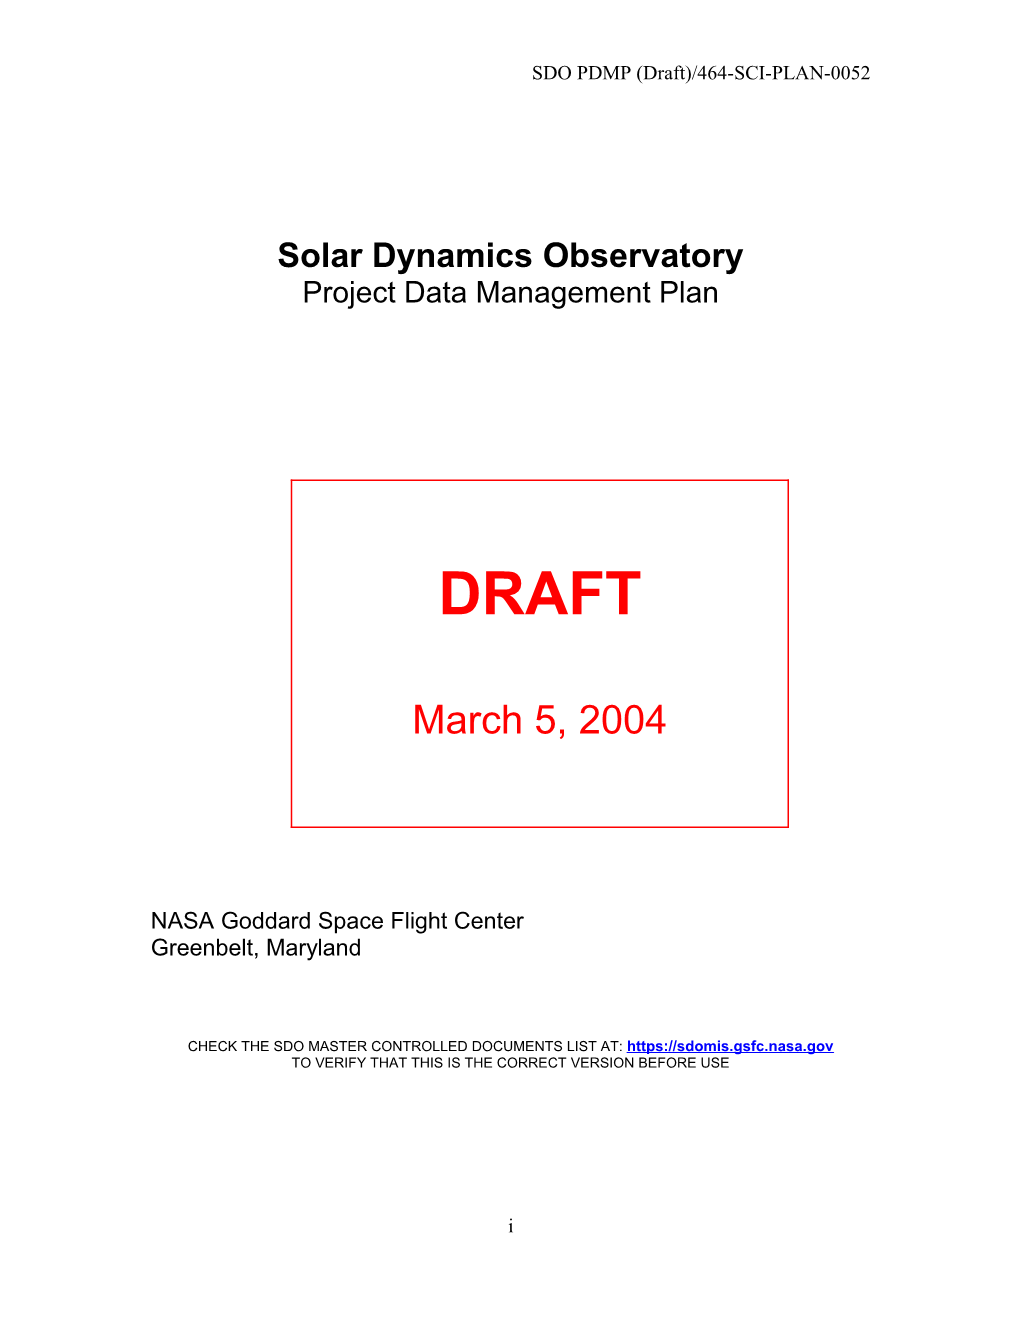 SDO PDMP (Draft)/464-SCI-PLAN-0052